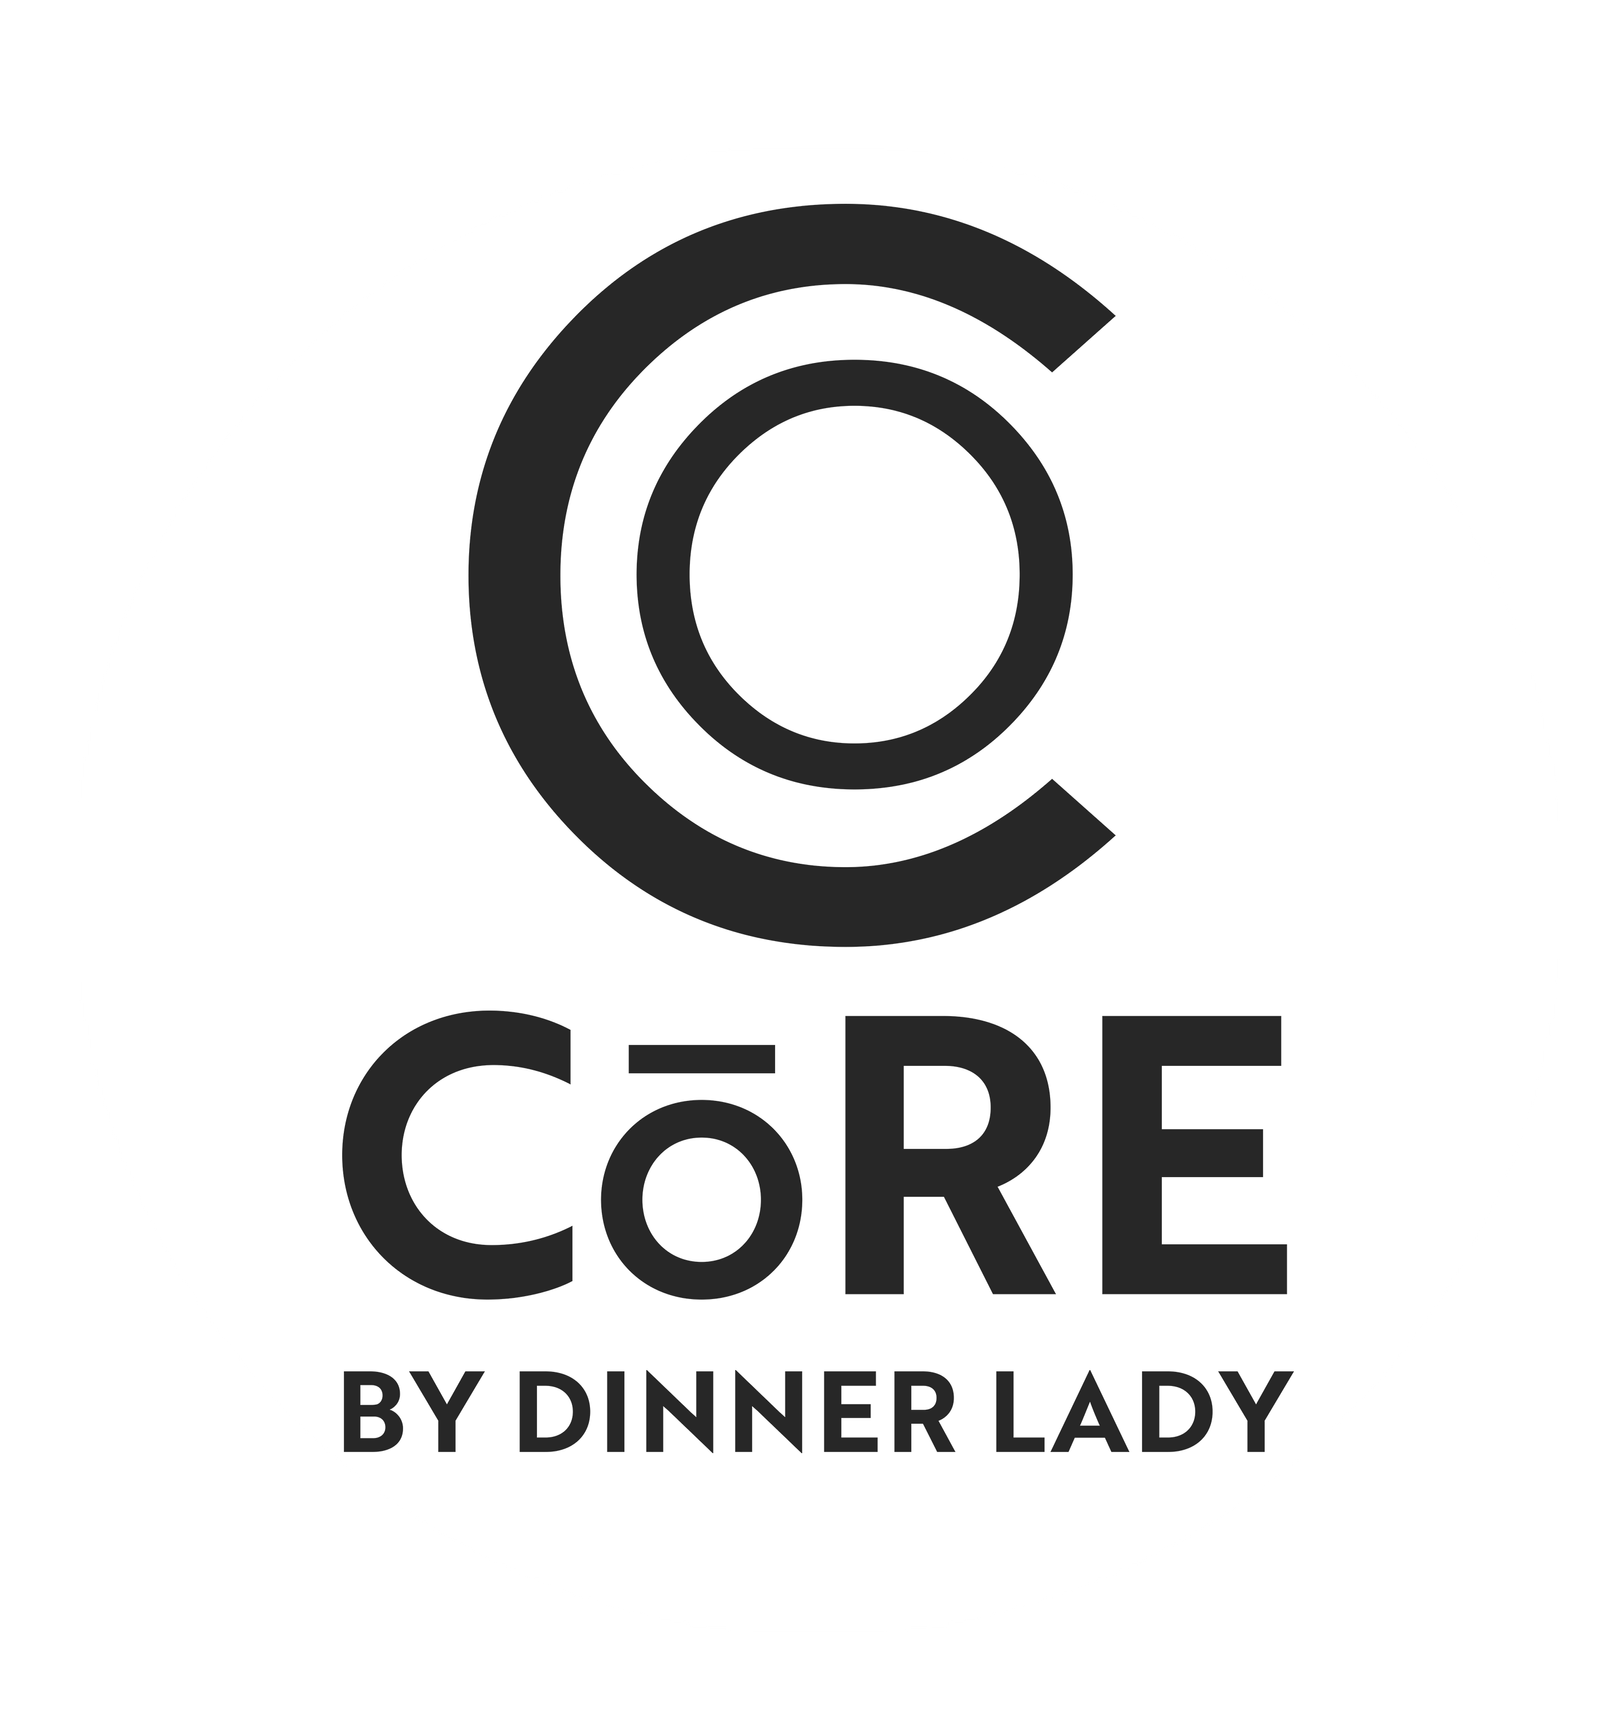 Dinner Lady - Core